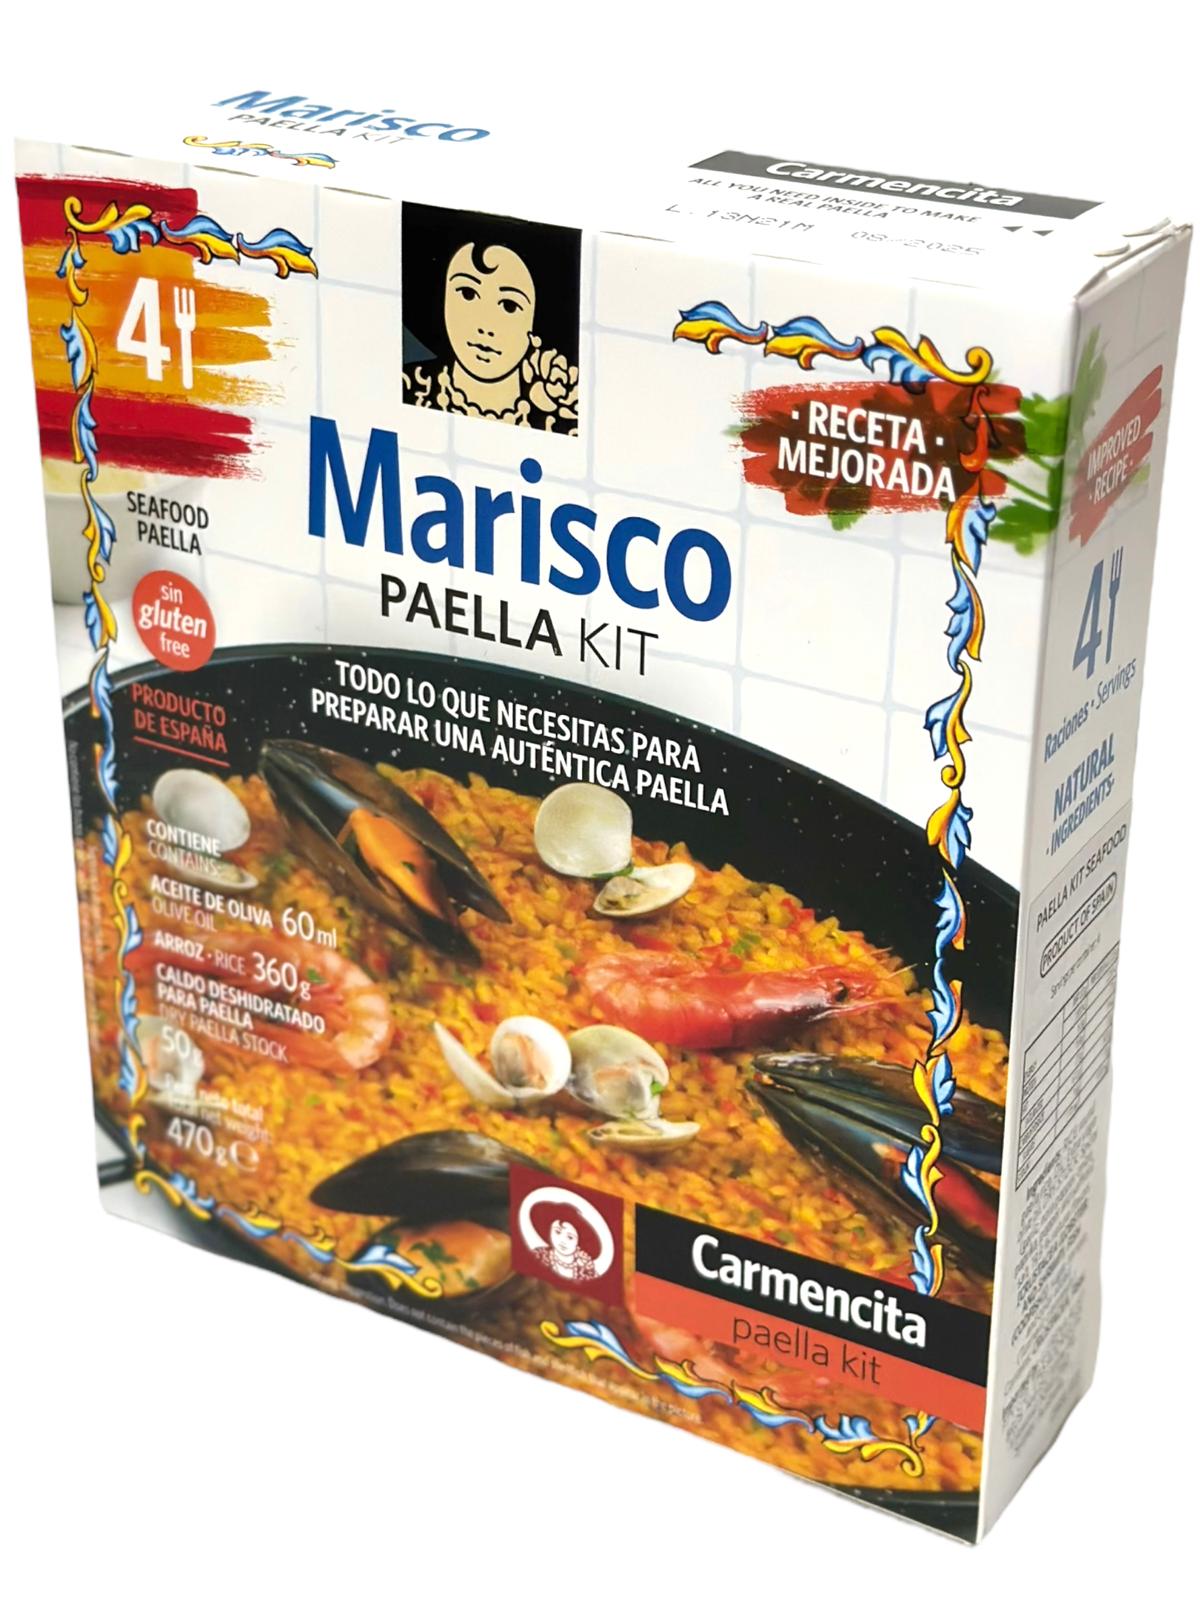 Carmencita Marisco Seafood Paella Kit 4 serves 470g Twin Pack 940g total